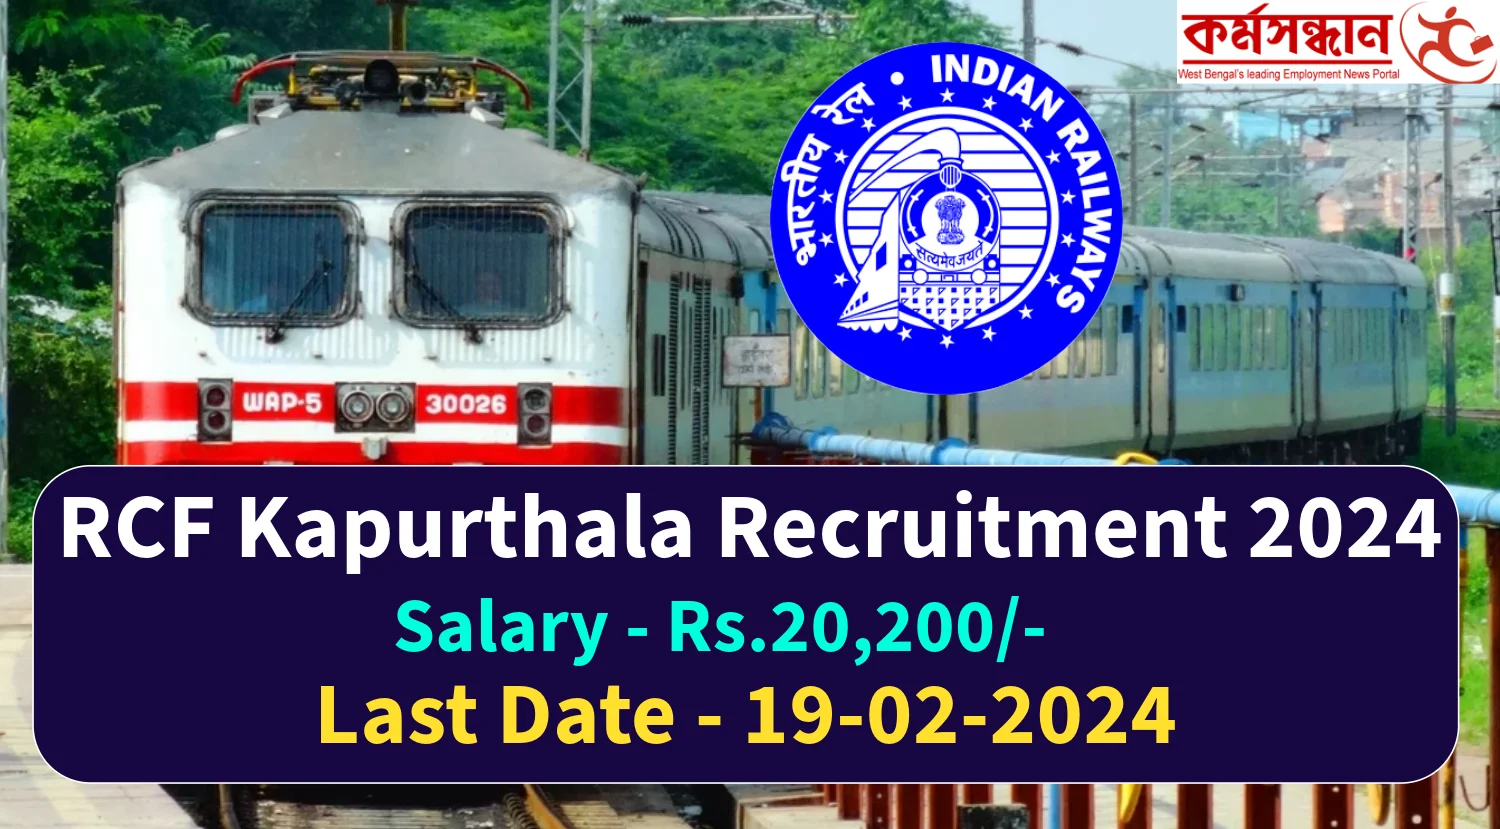 RCF Kapurthala Group C Recruitment 2024